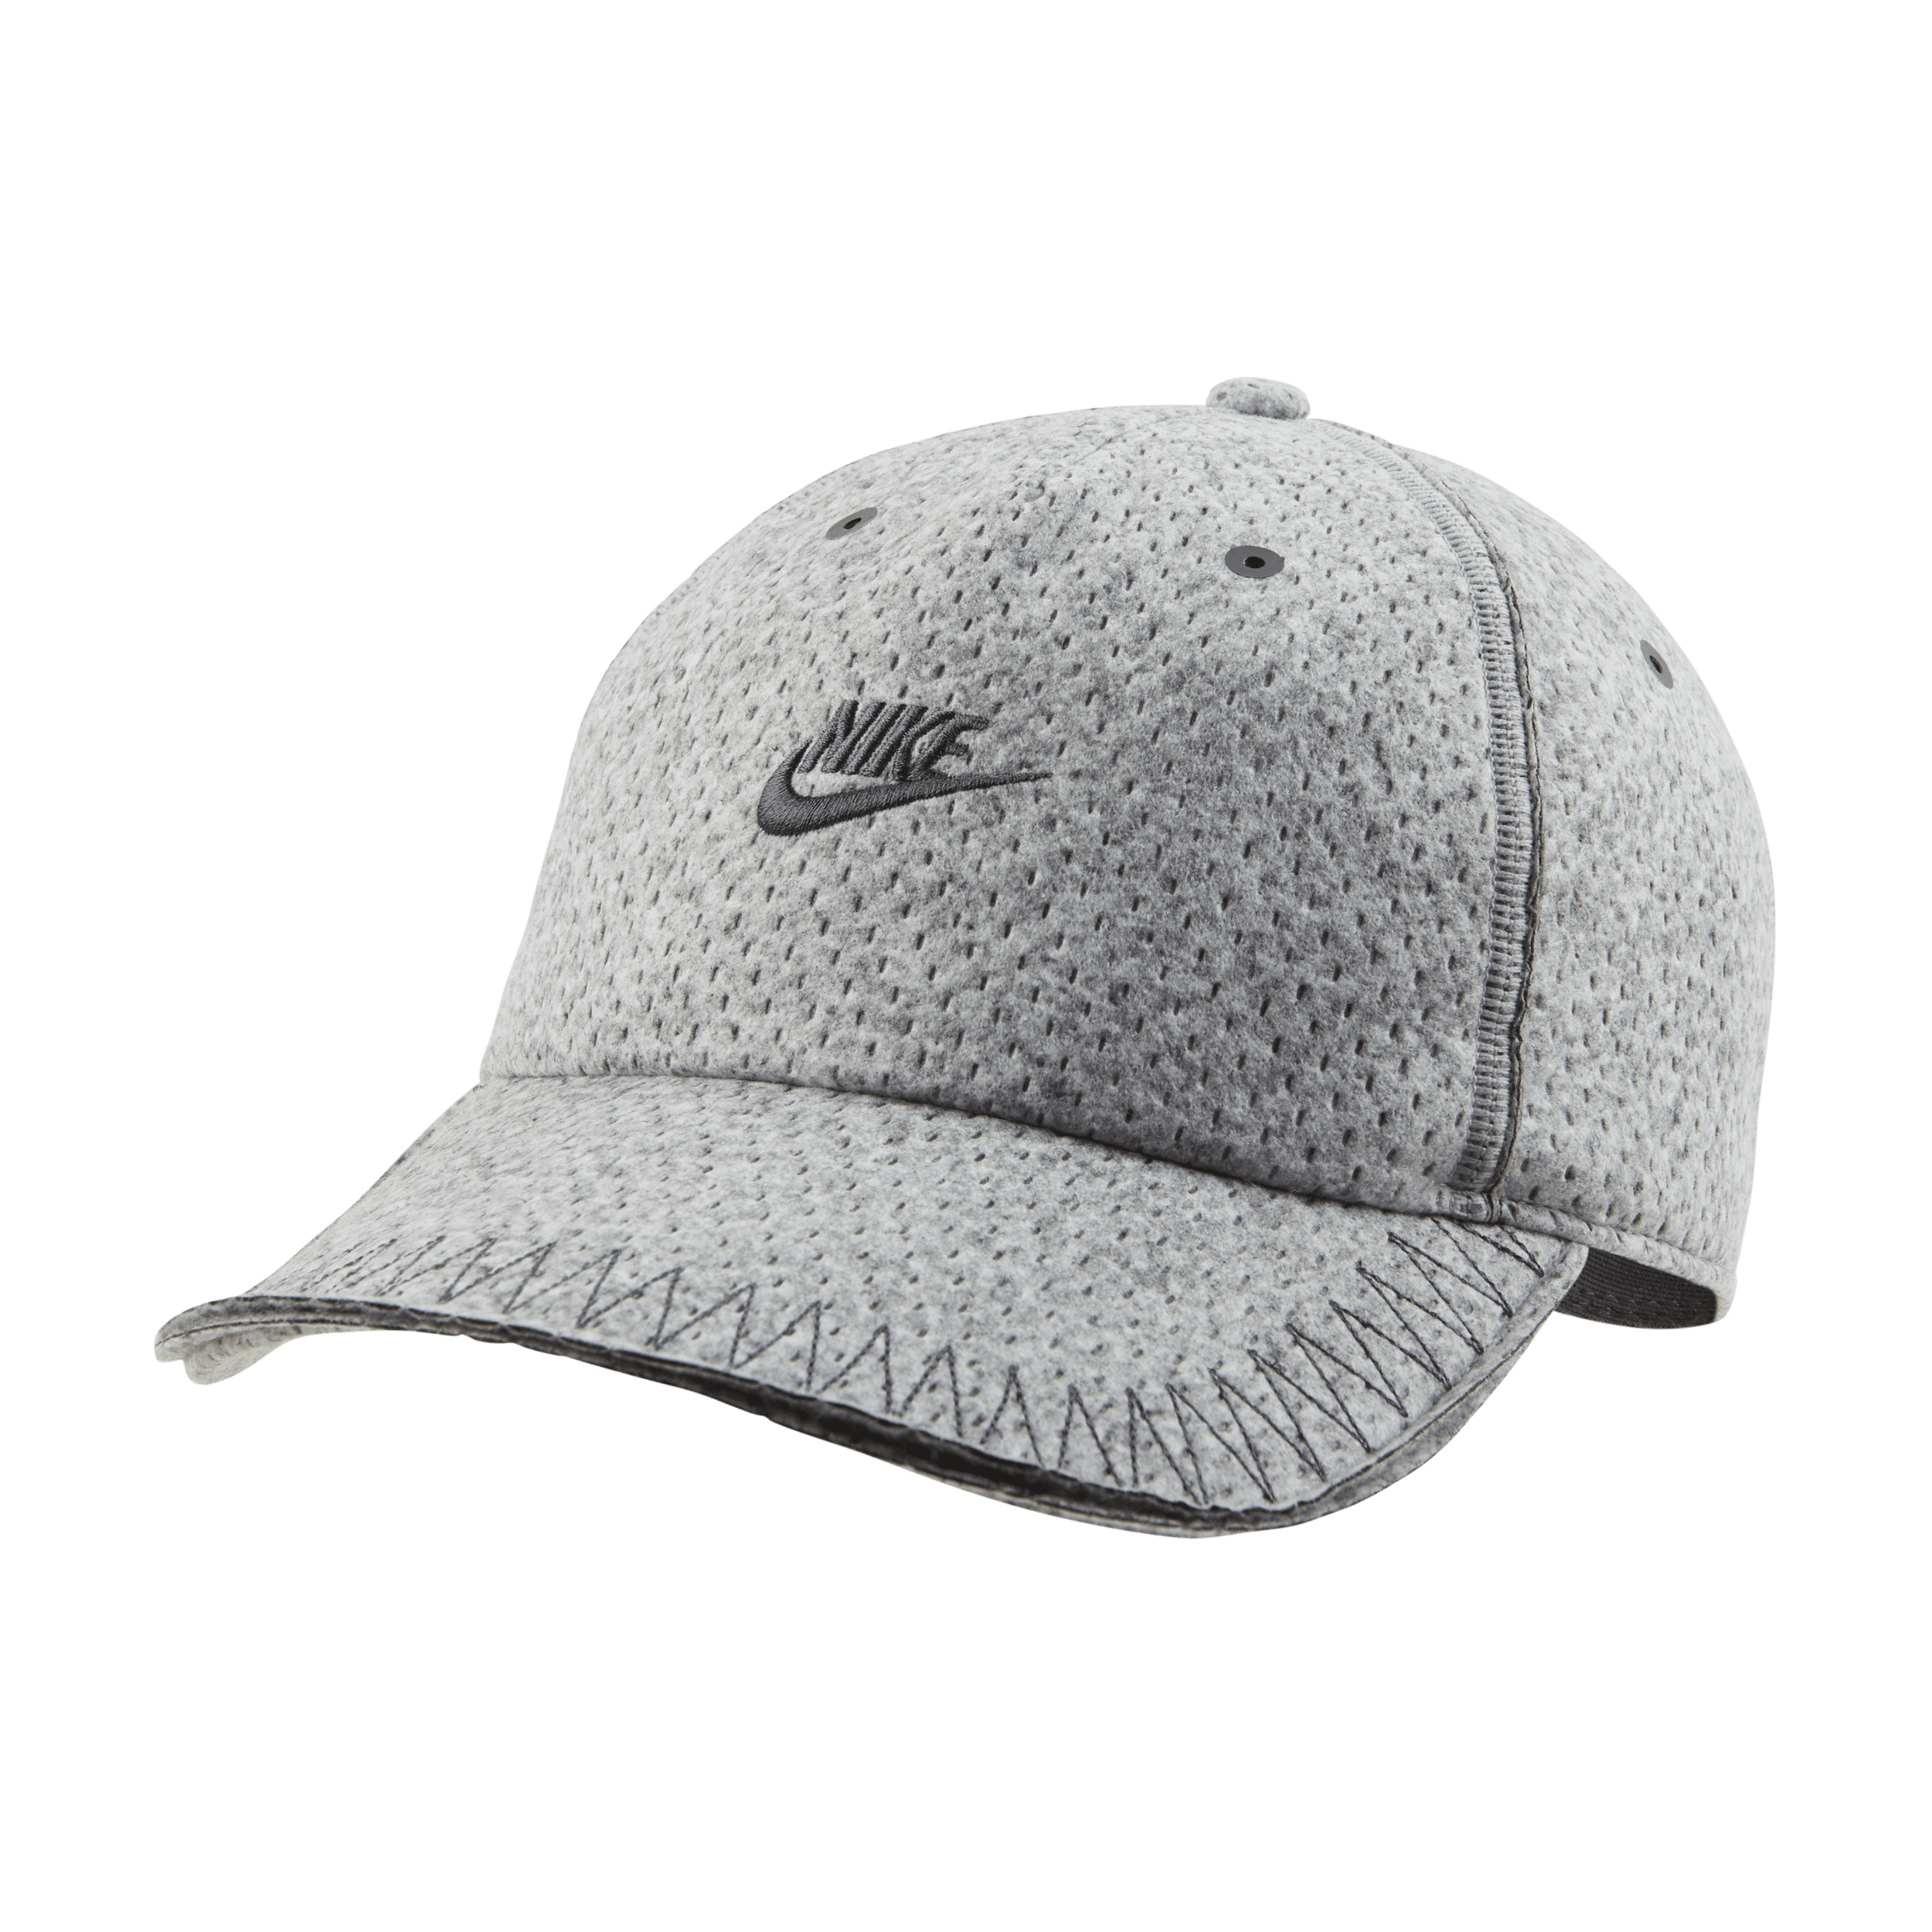 Cappello essenziale con visiera curva Nike Forward Cap - Grigio